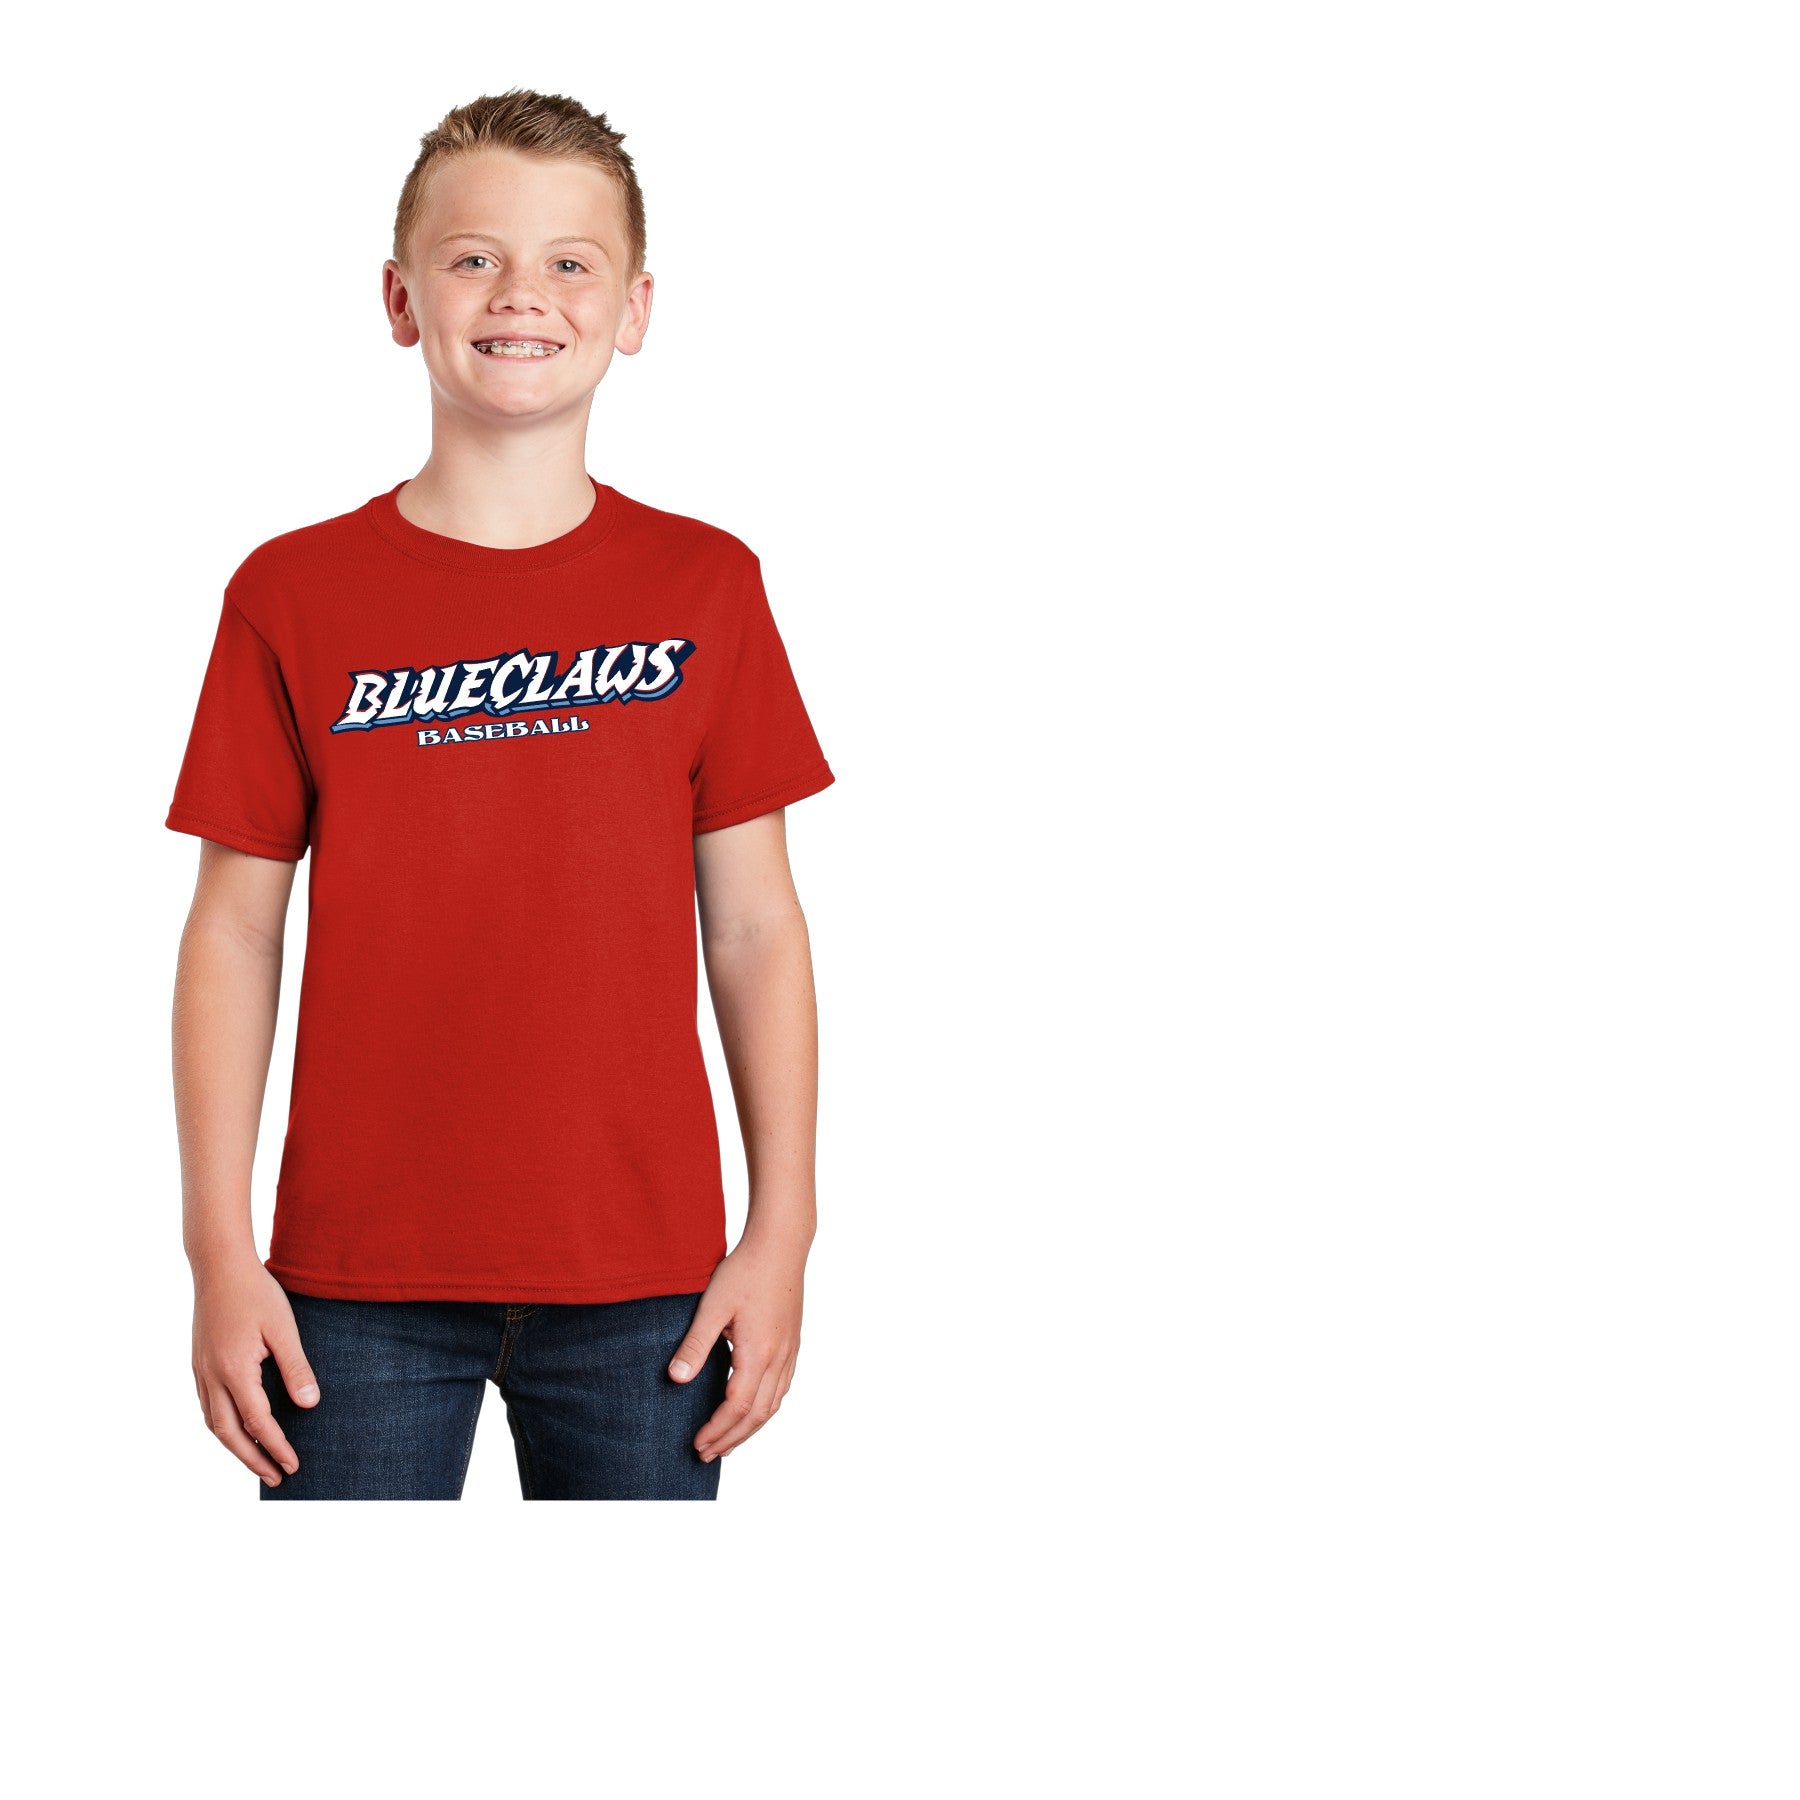 Blue Claws Baseball DryBlend Red short-sleeve t-shirt 